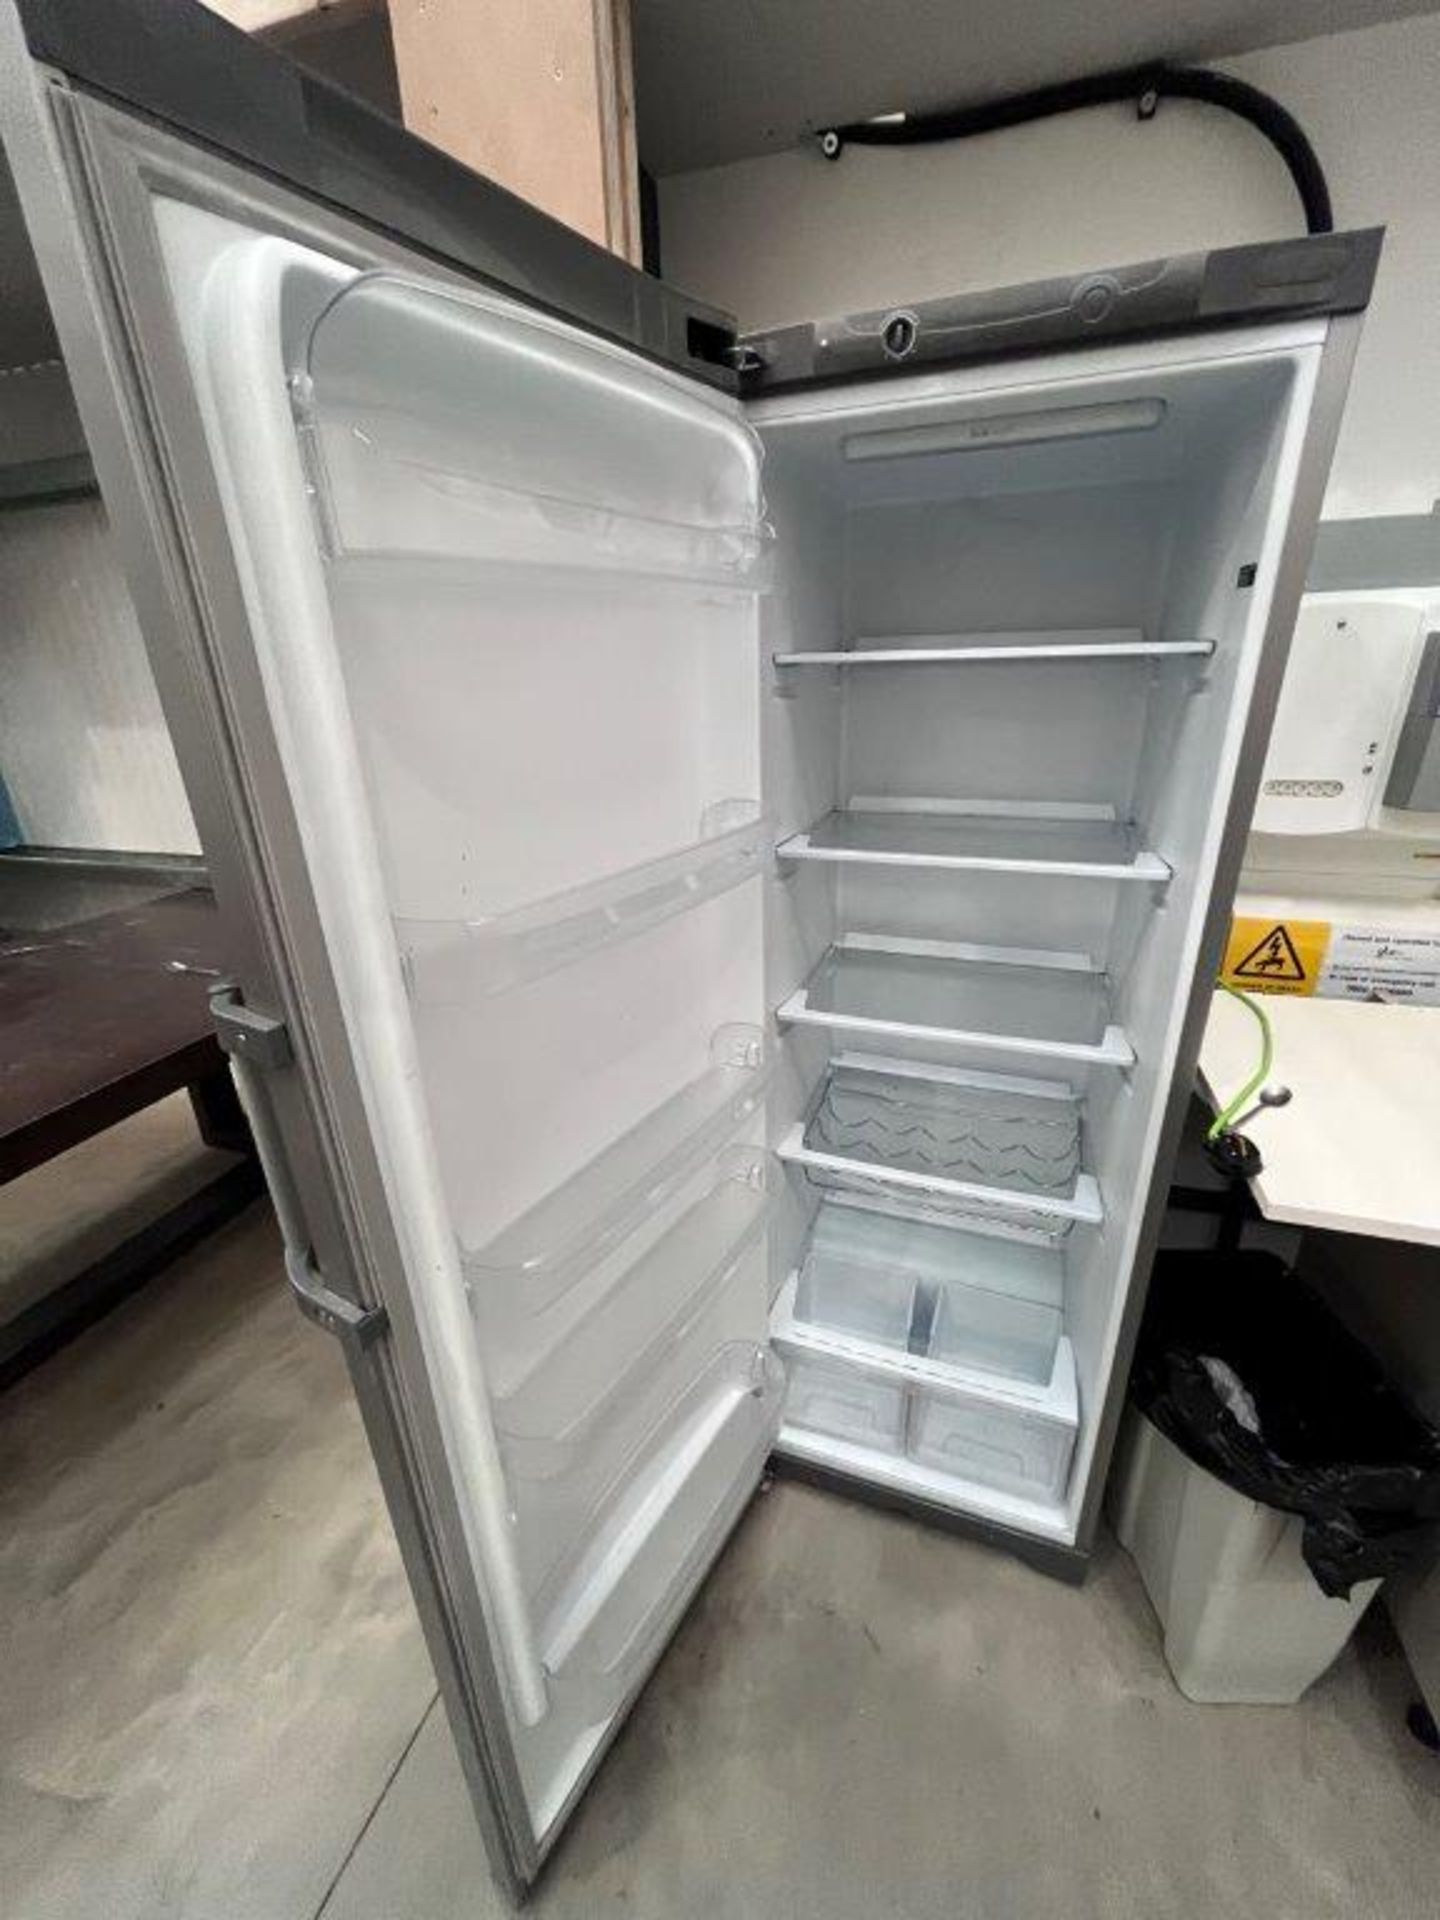 Hotpoint MC06 upright refrigerator - Image 2 of 3